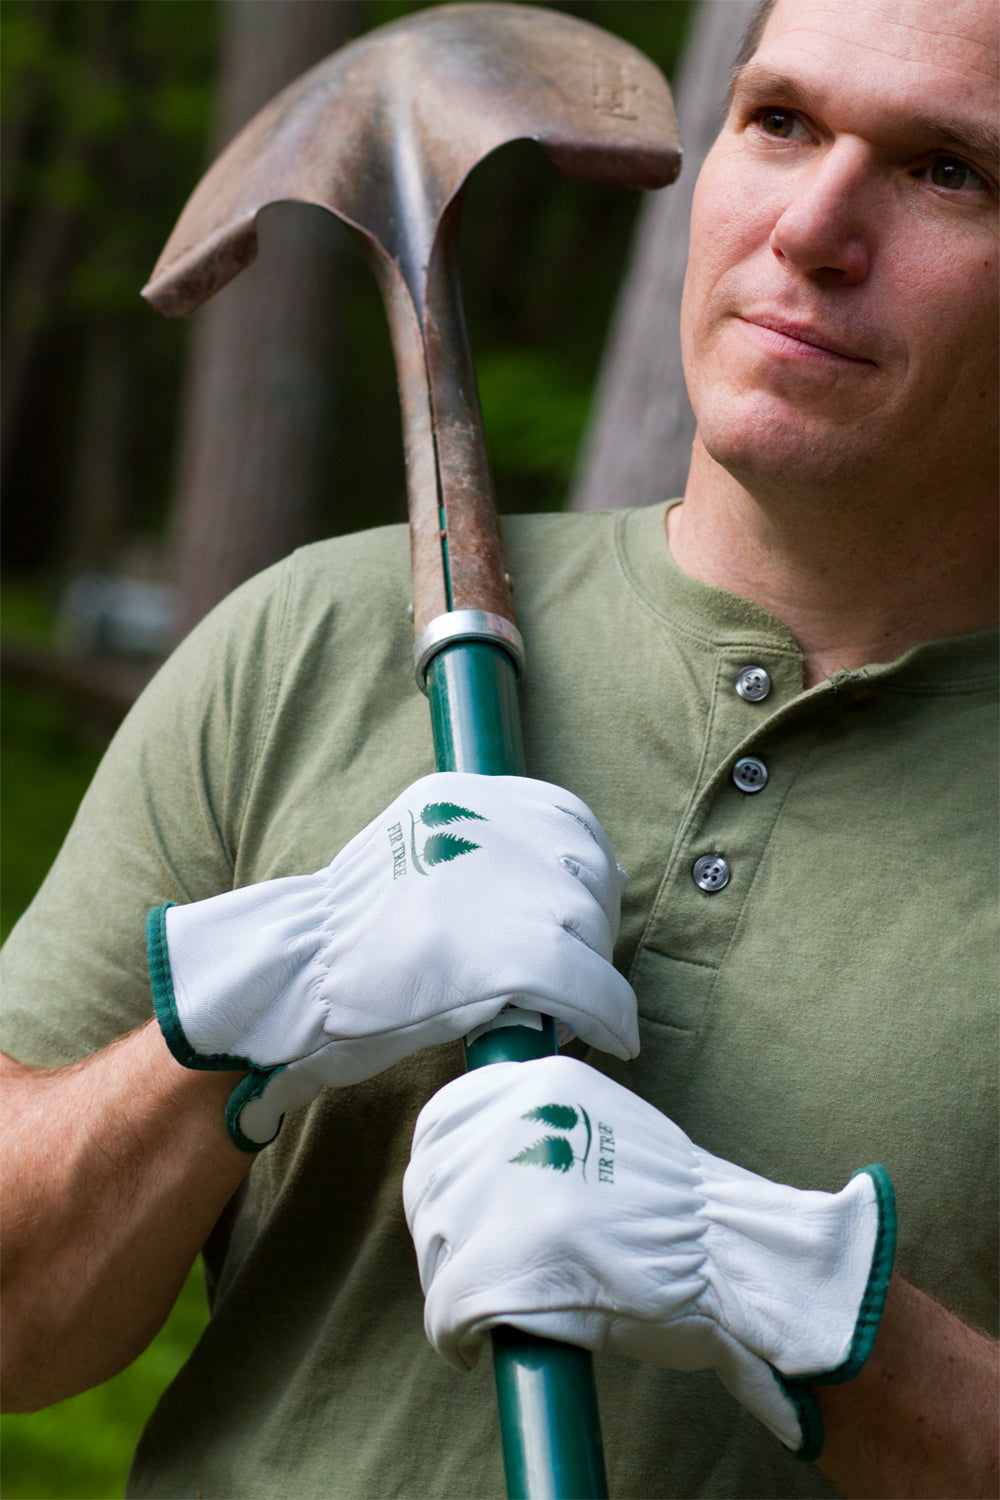 Goatskin Leather Gardening Gloves for Garden and Outdoor Work.